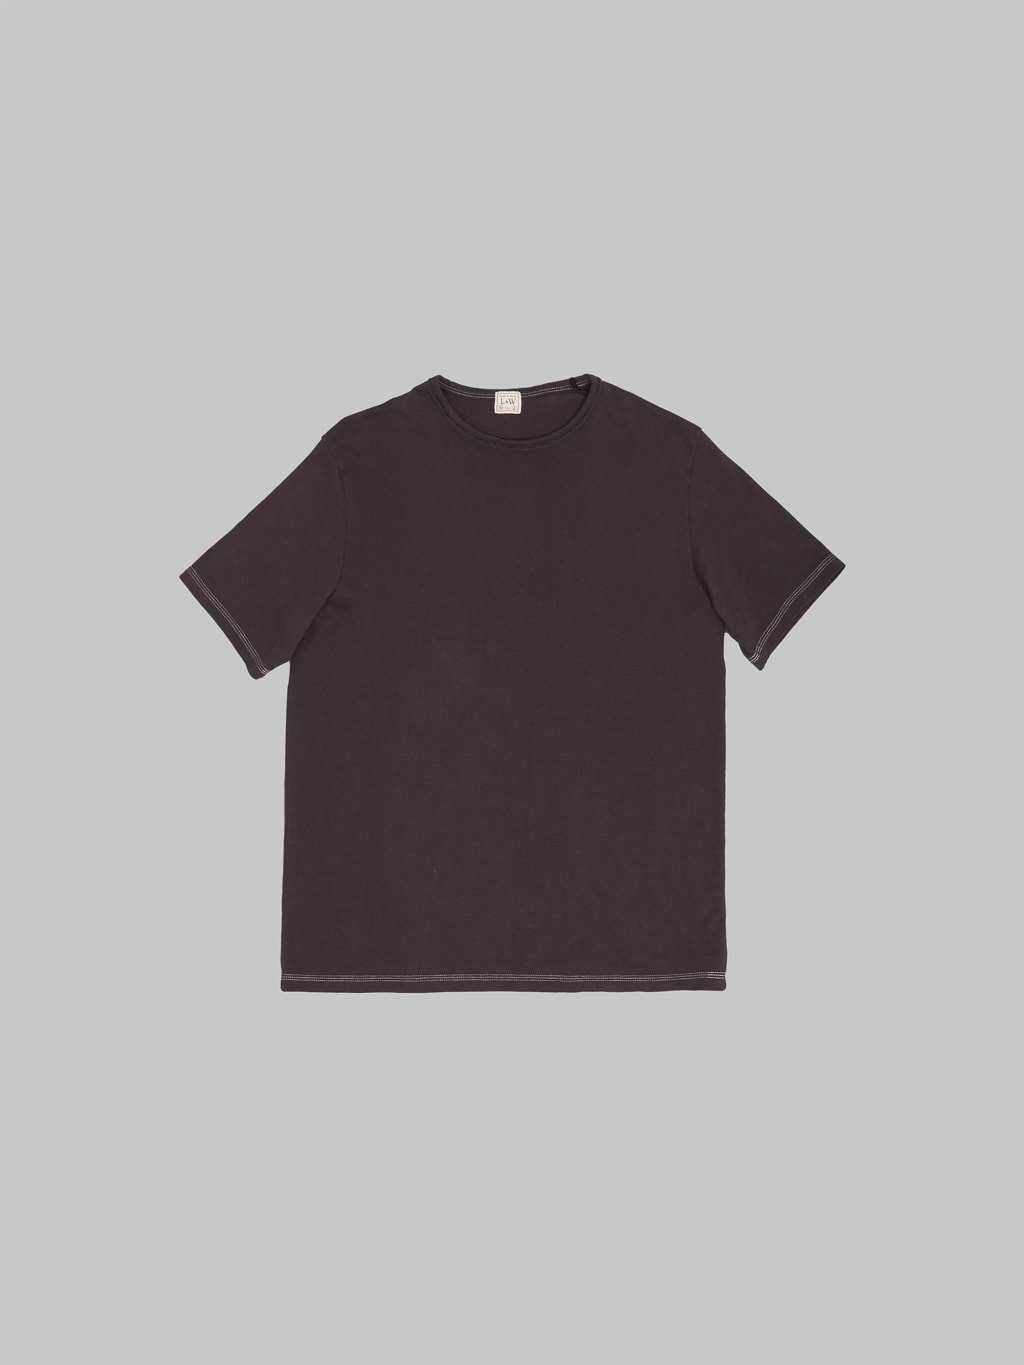 Loop & Weft Recycled Nep Plating Dot Seam Crewneck Natural T-Shirt Antique Black